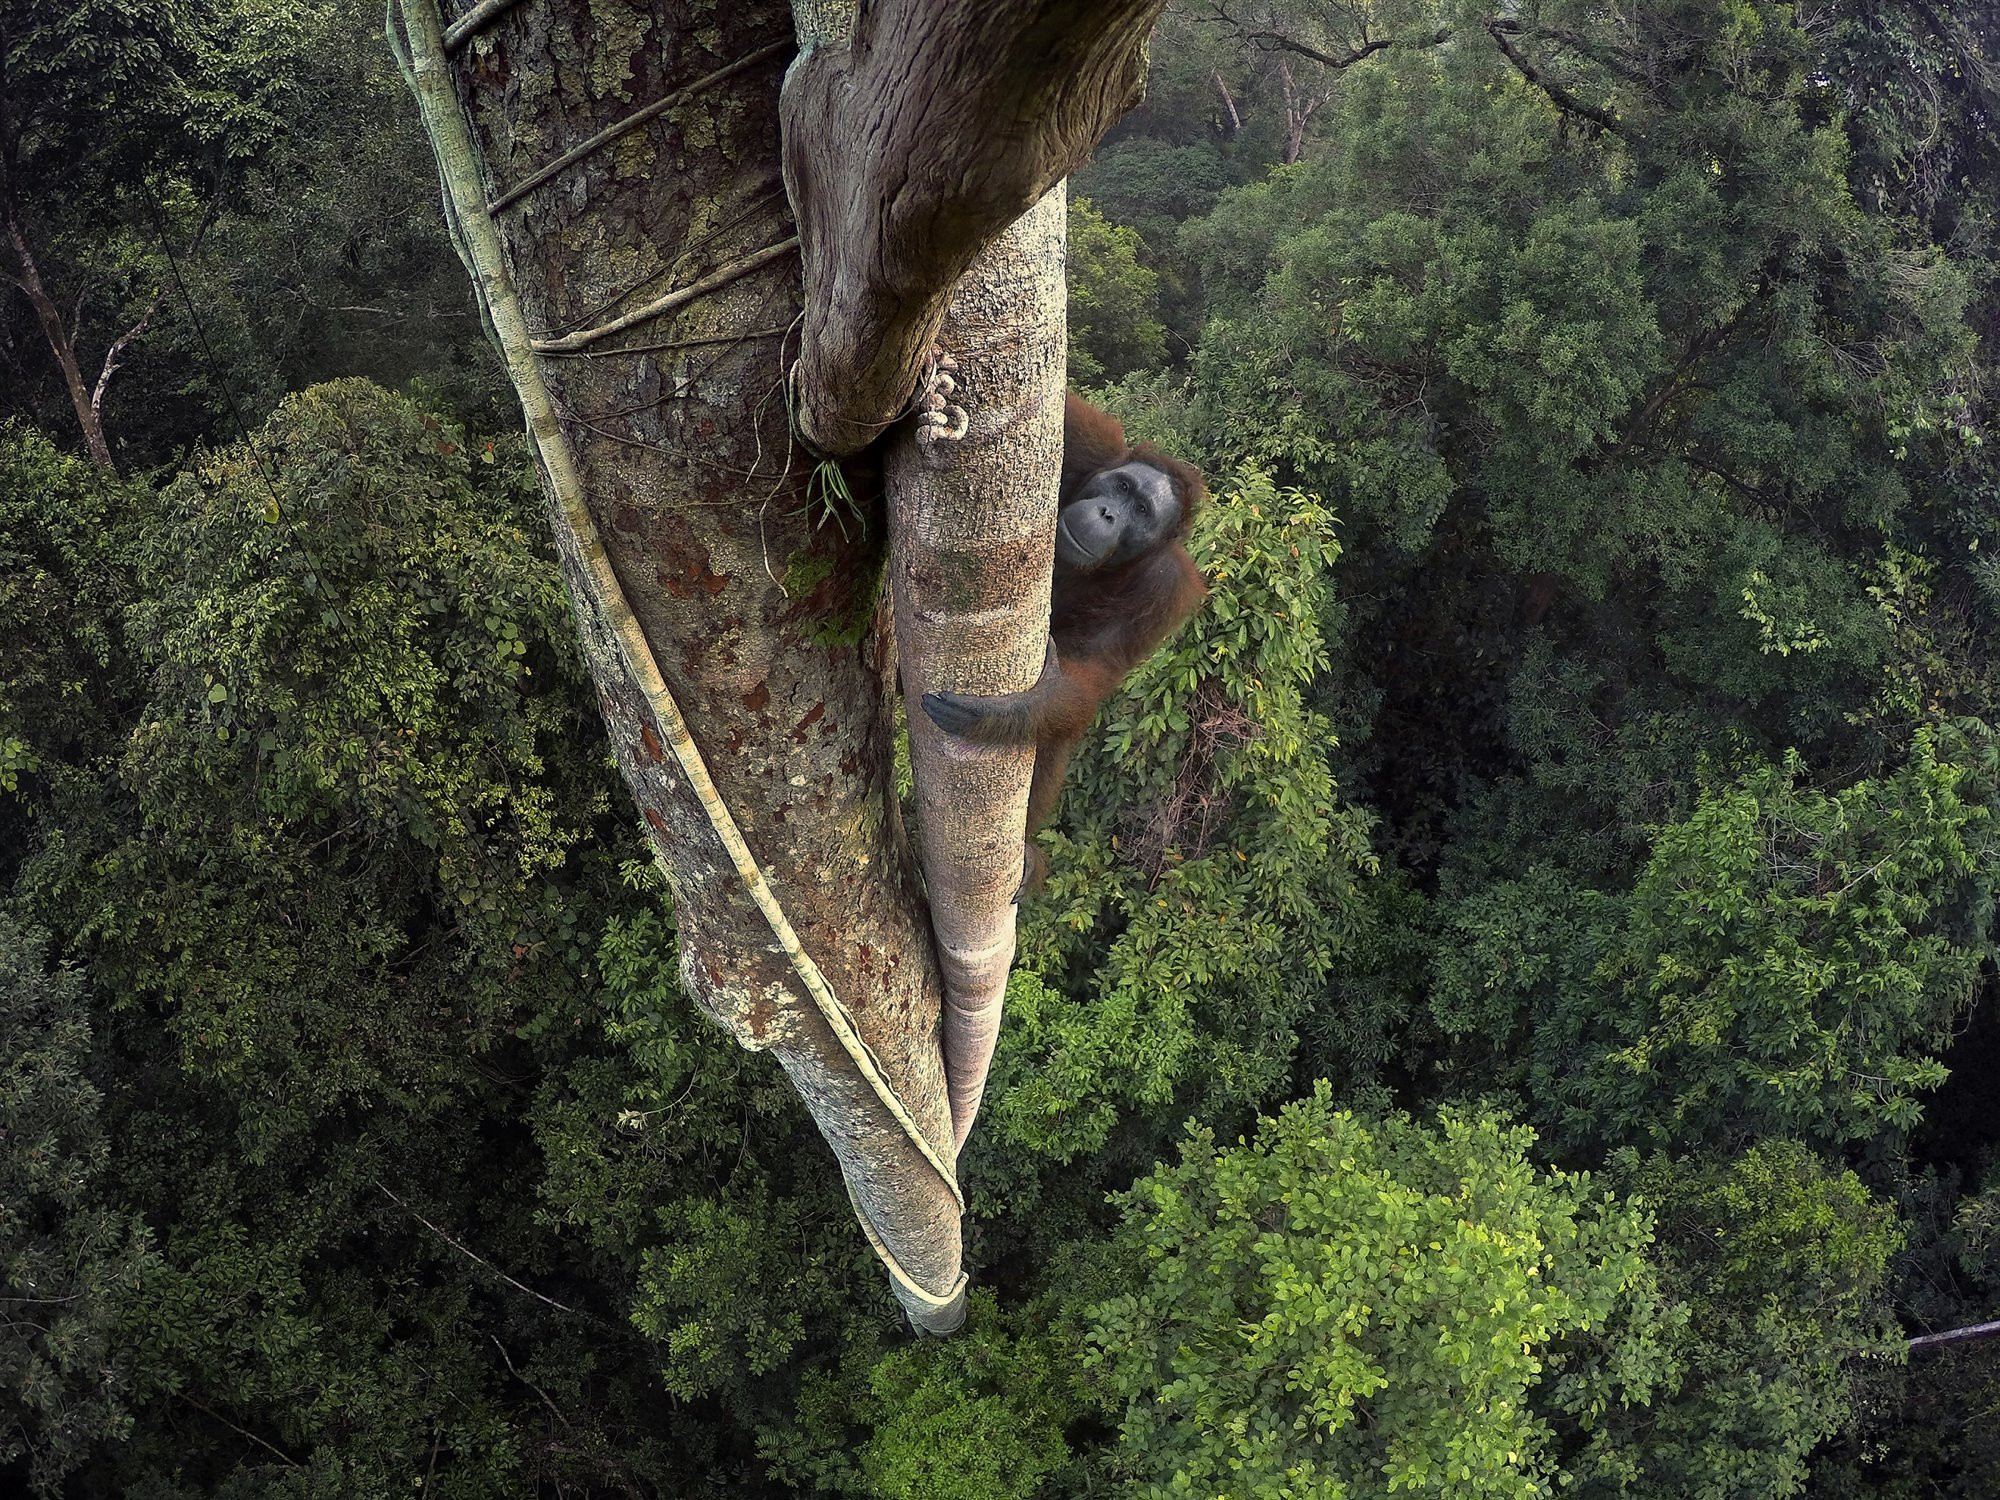 Foto: Tim Laman / National Geographic.